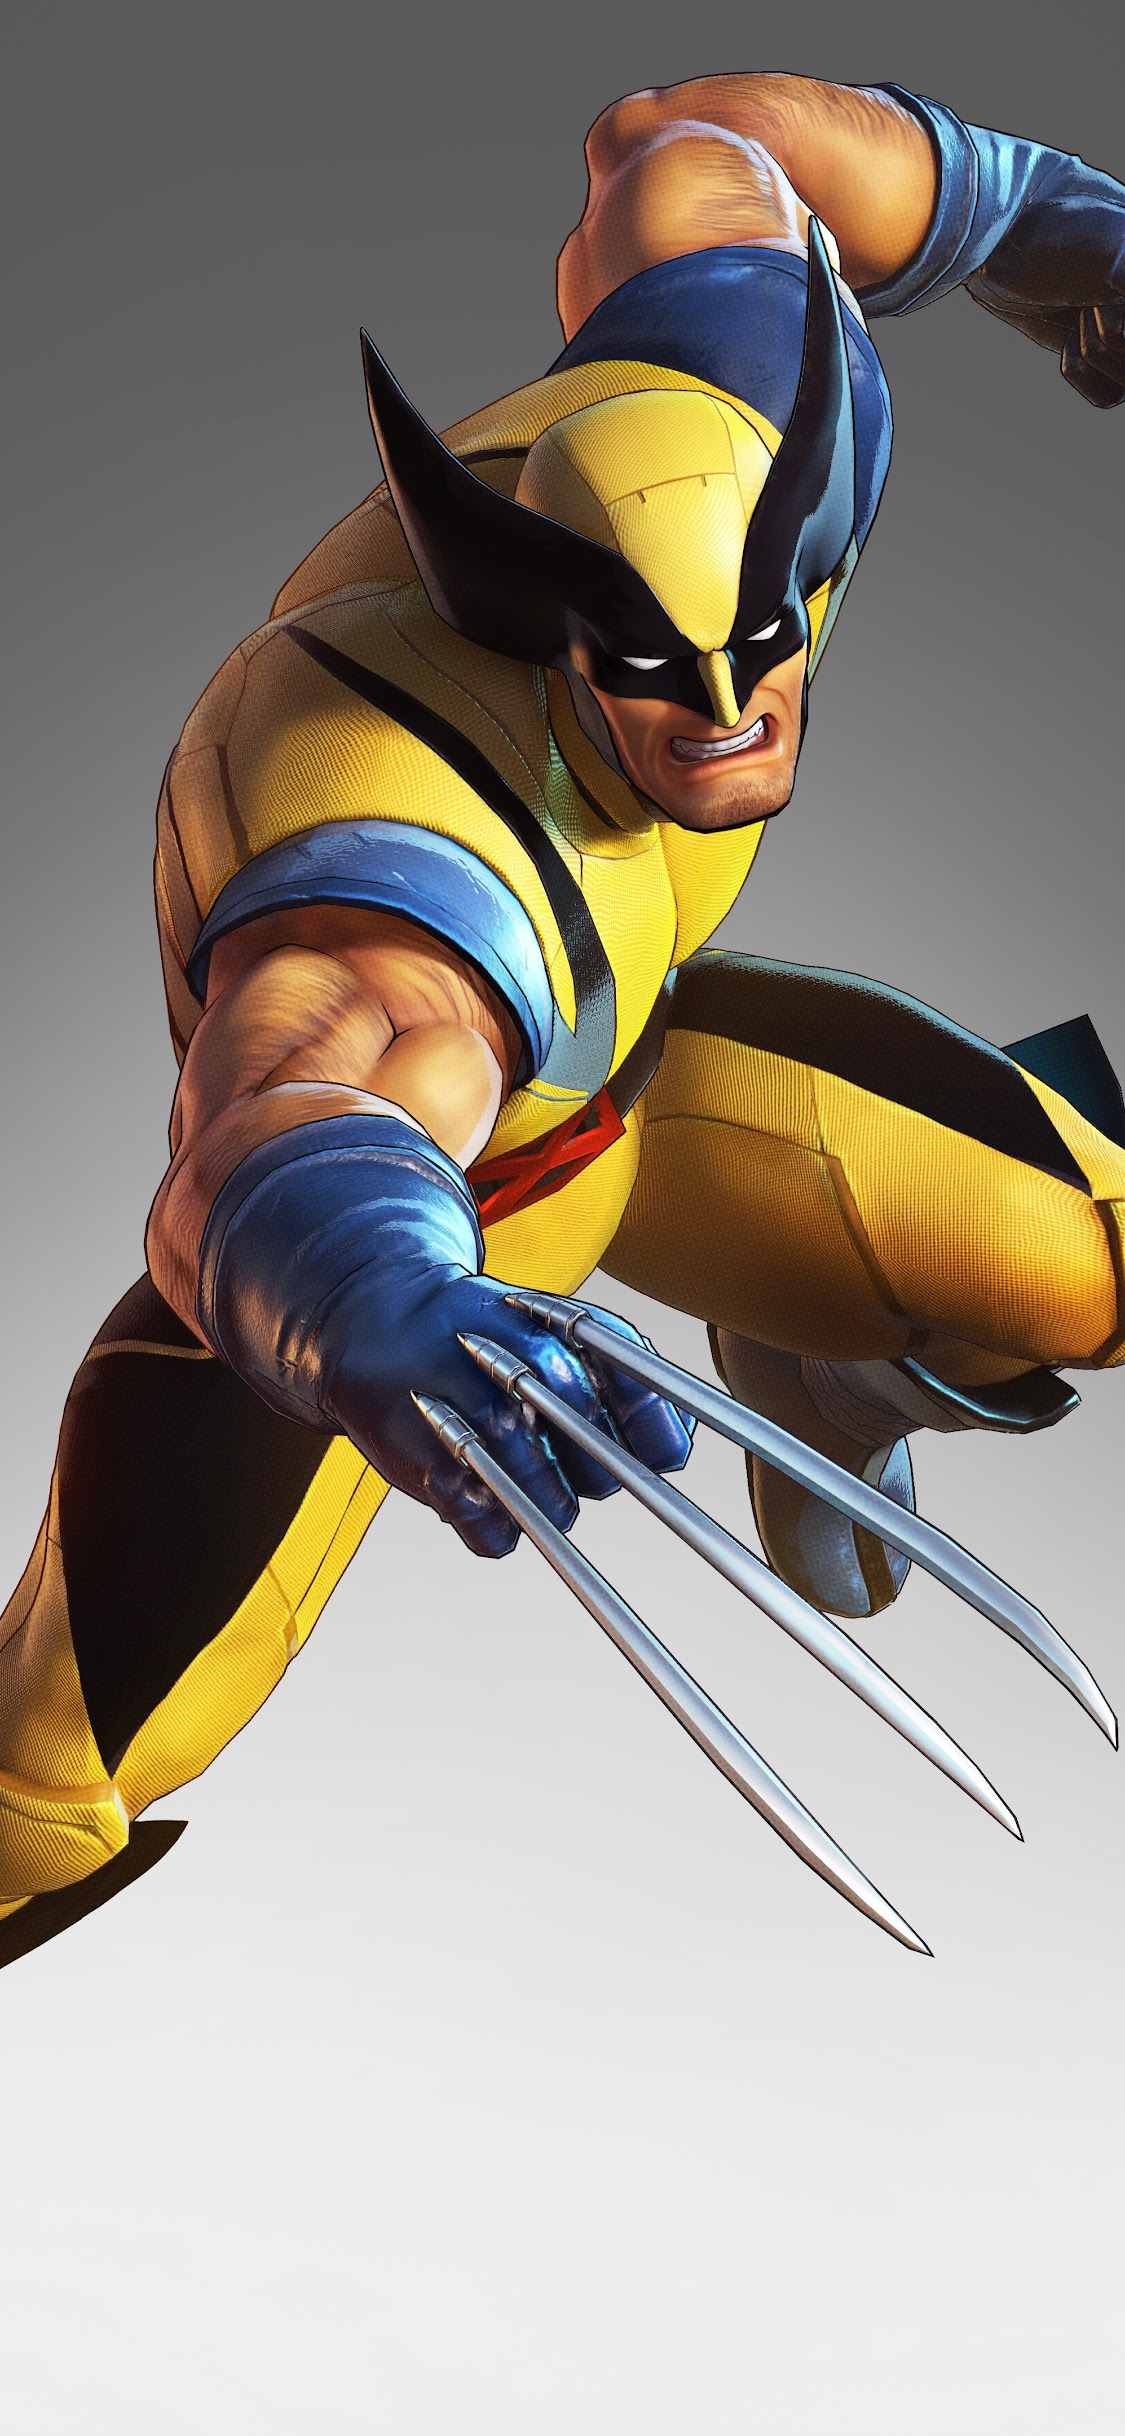 Wolverine Marvel Ultimate Alliance 3 8K Wallpaper